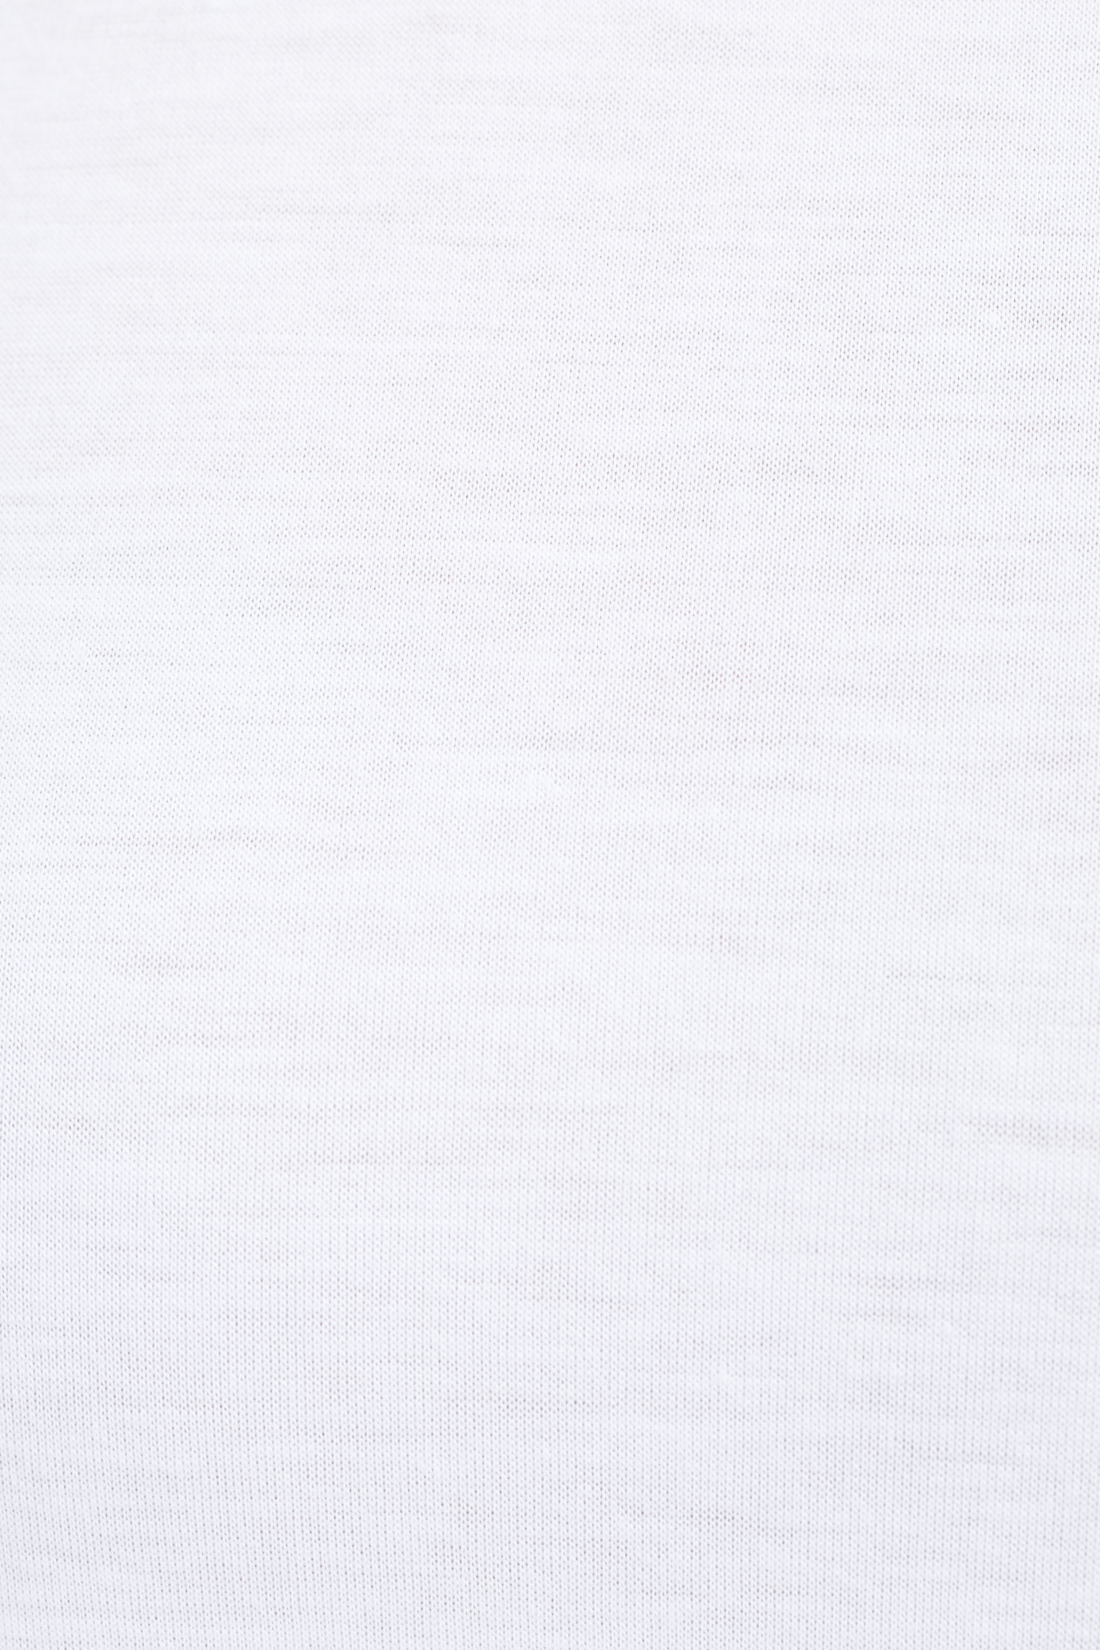 Базовая майка-безрукавка (арт. baon B257201), размер XS, цвет белый Базовая майка-безрукавка (арт. baon B257201) - фото 3